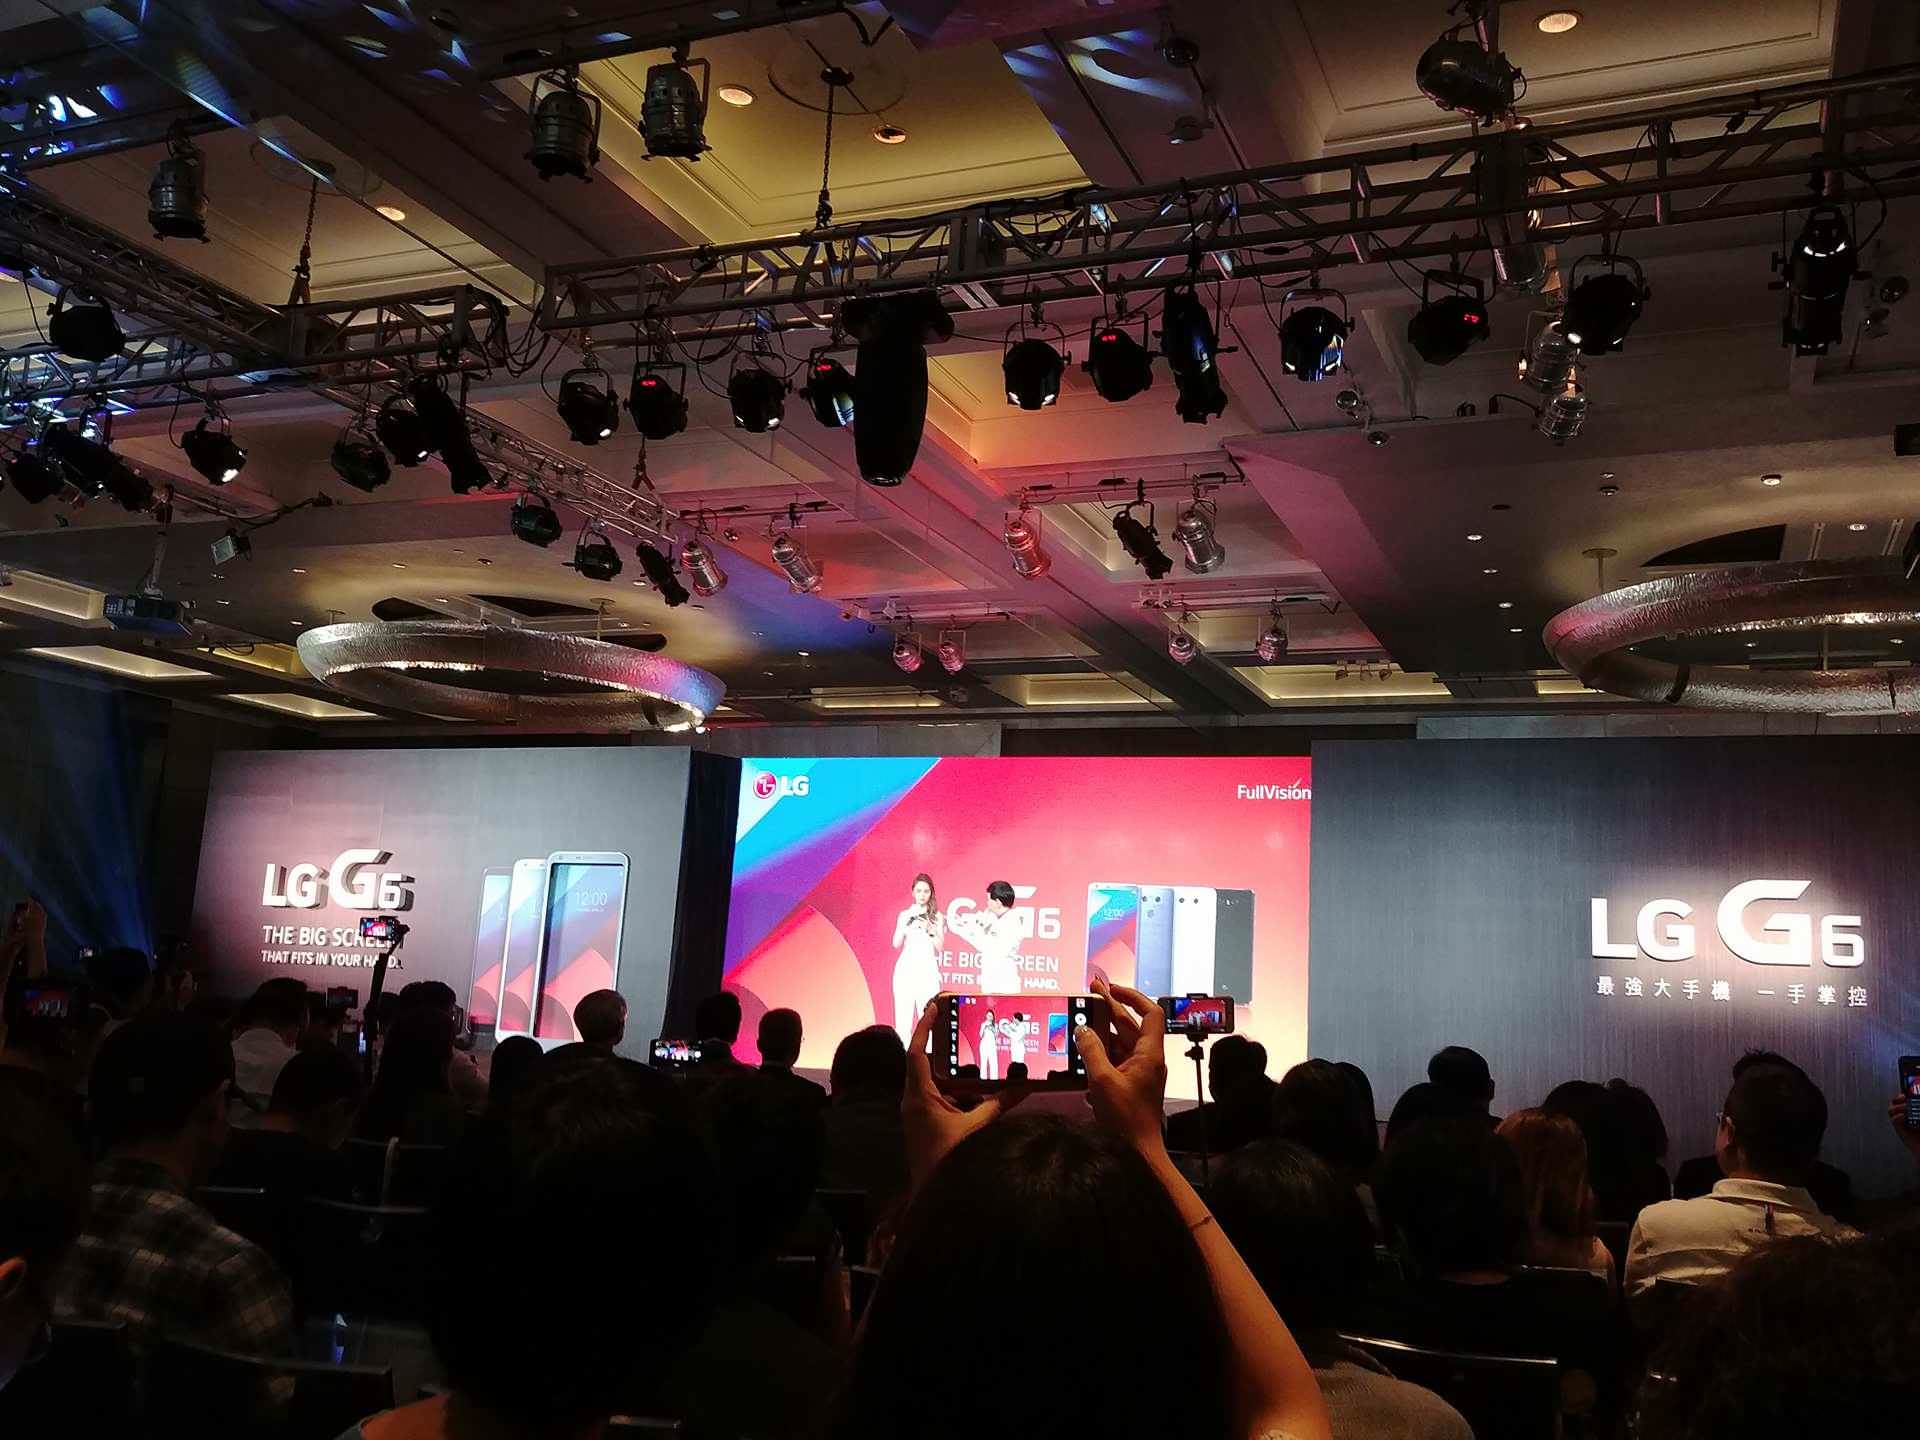 [NEWS] LG G6 正式發表. 125 度超廣角鏡頭， 18:9 比例單手好操作